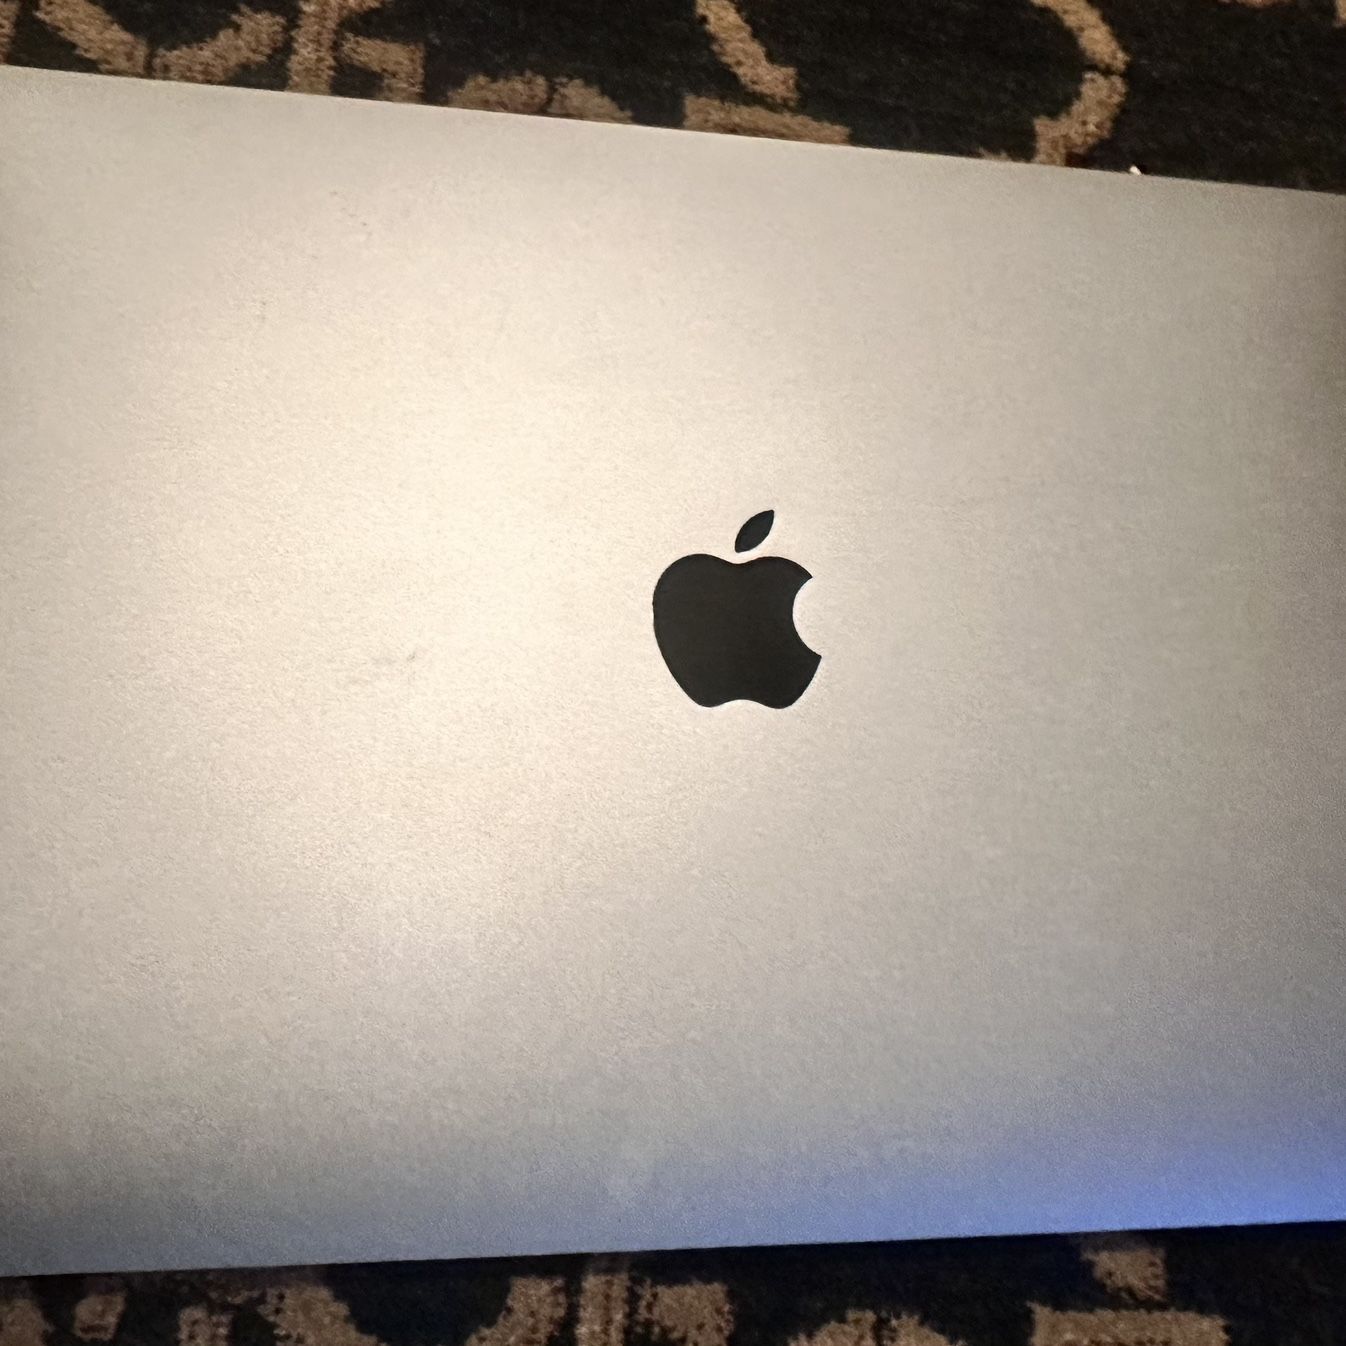 Apple MacBook Pro 13in (256GB SSD, M1, 8GB) Laptop - Space Gray - MYD82LL/A